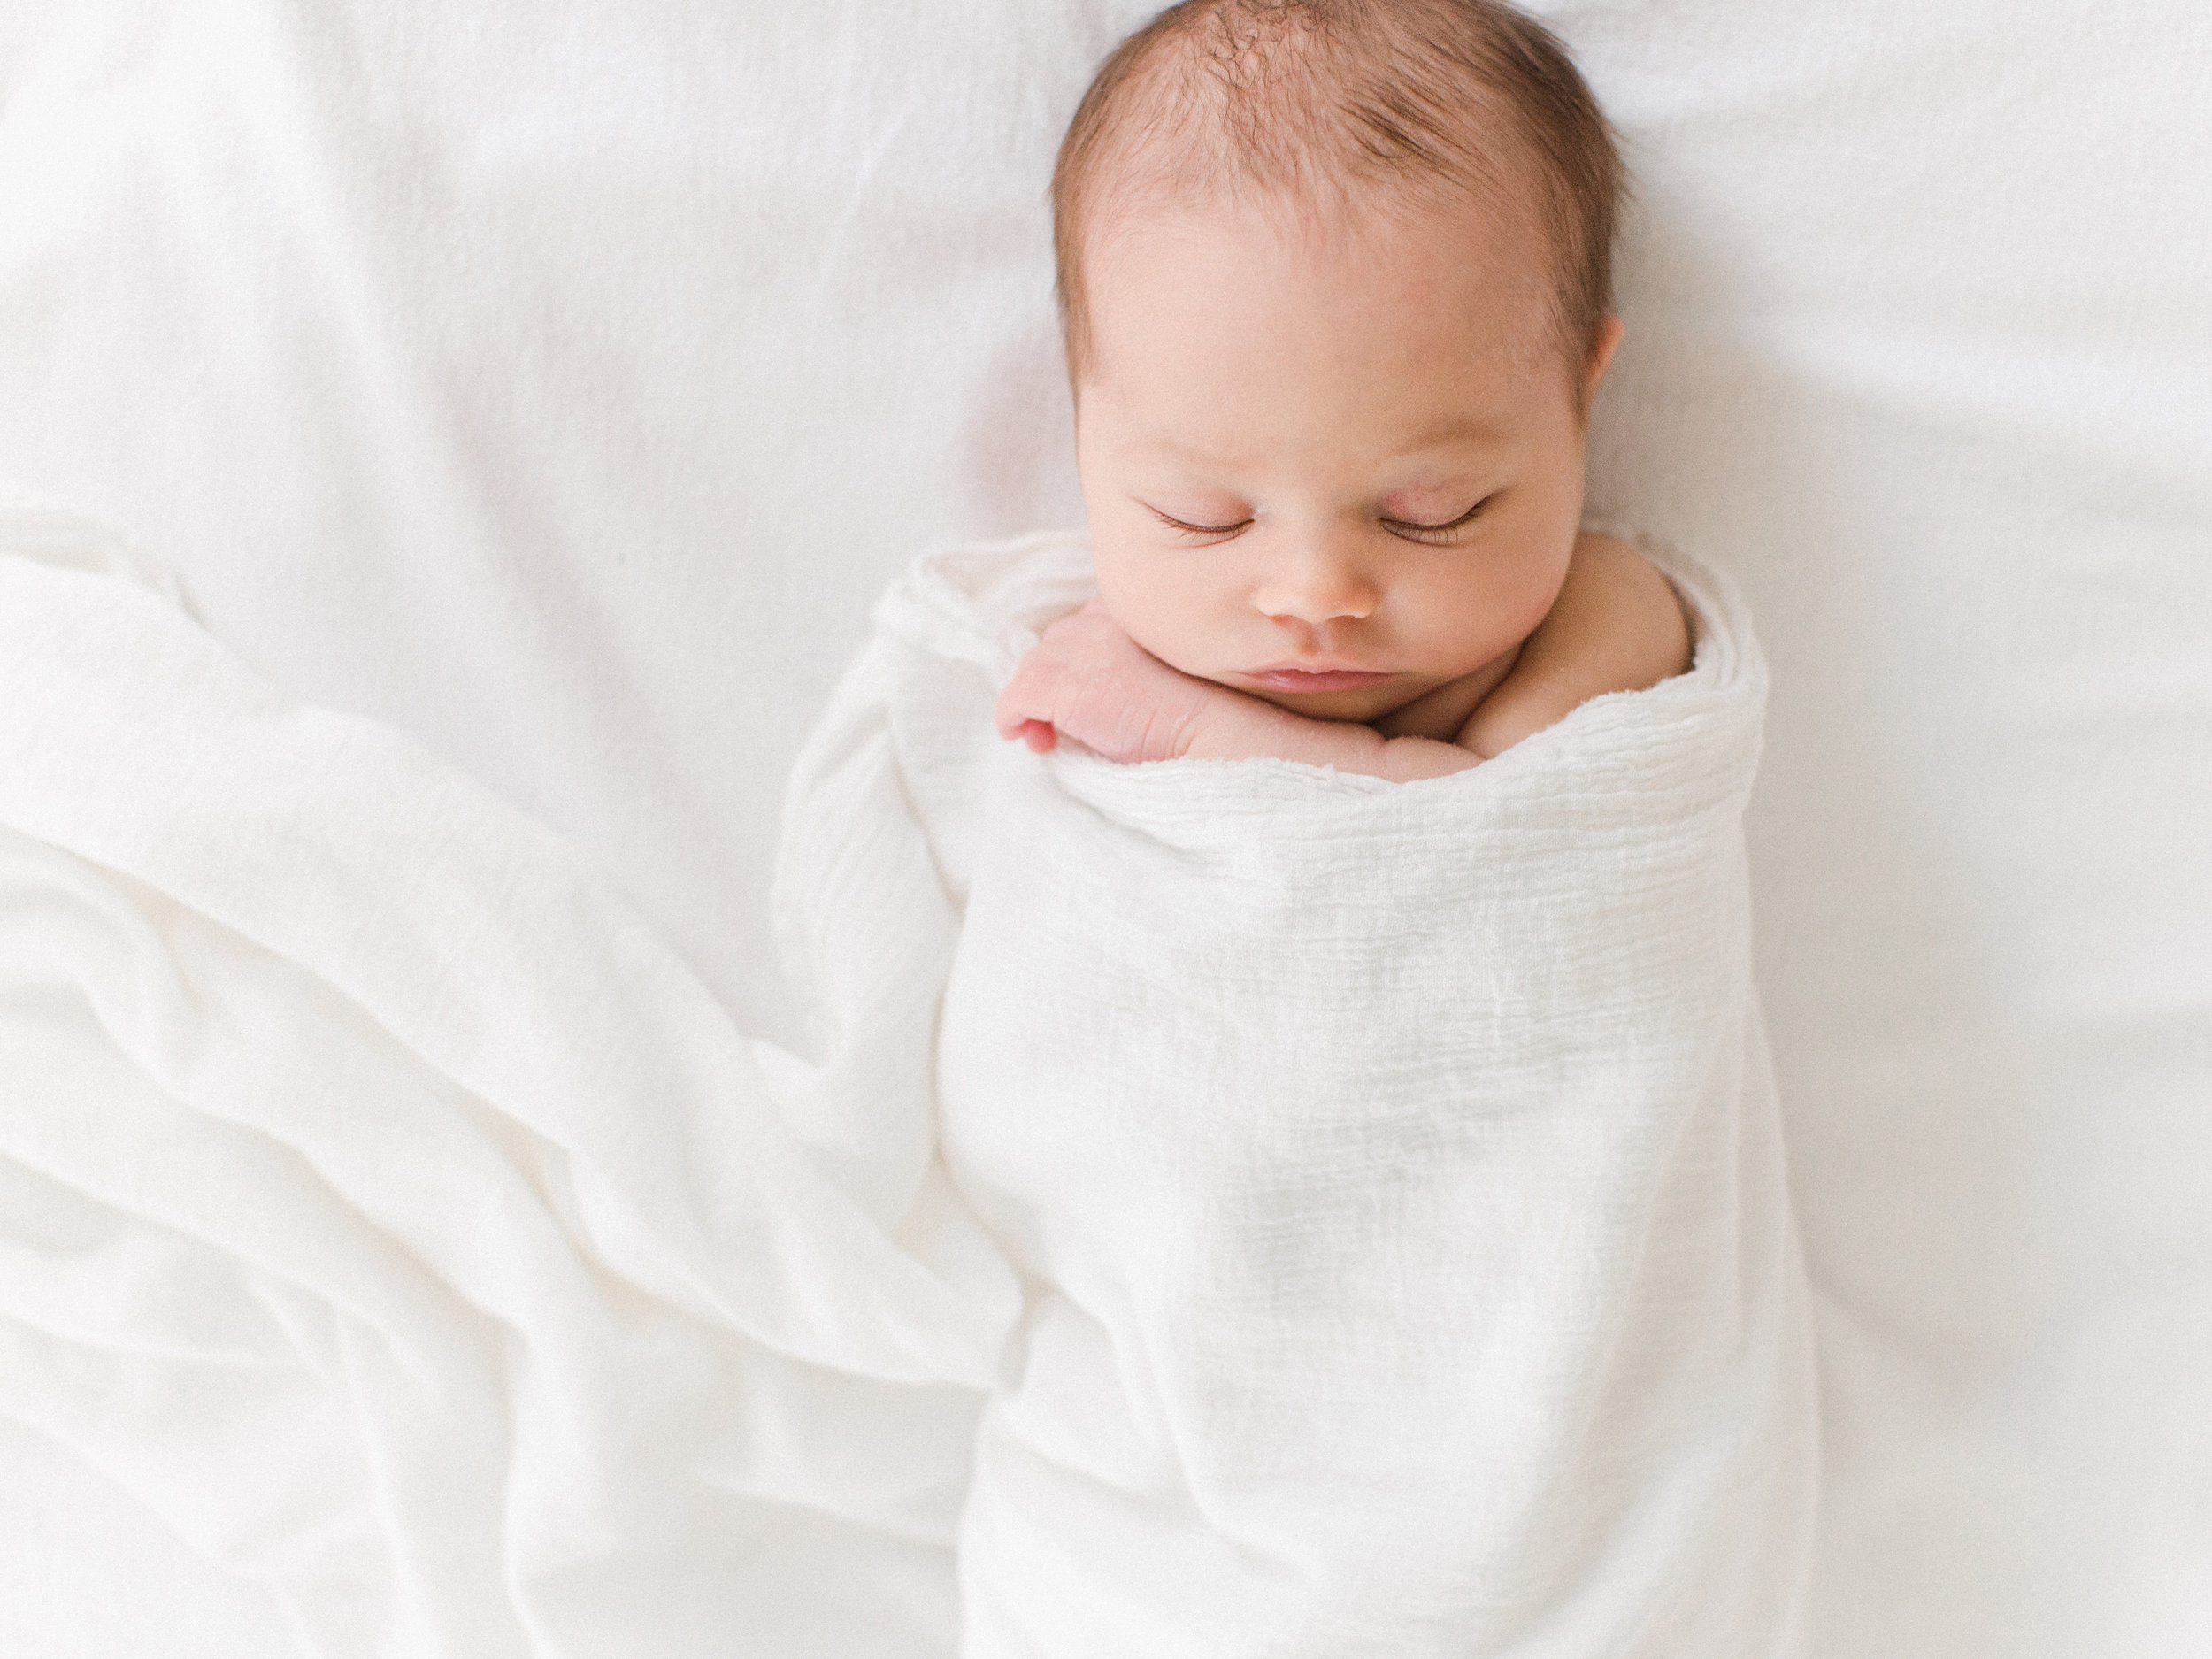 Untraditional newborn photos